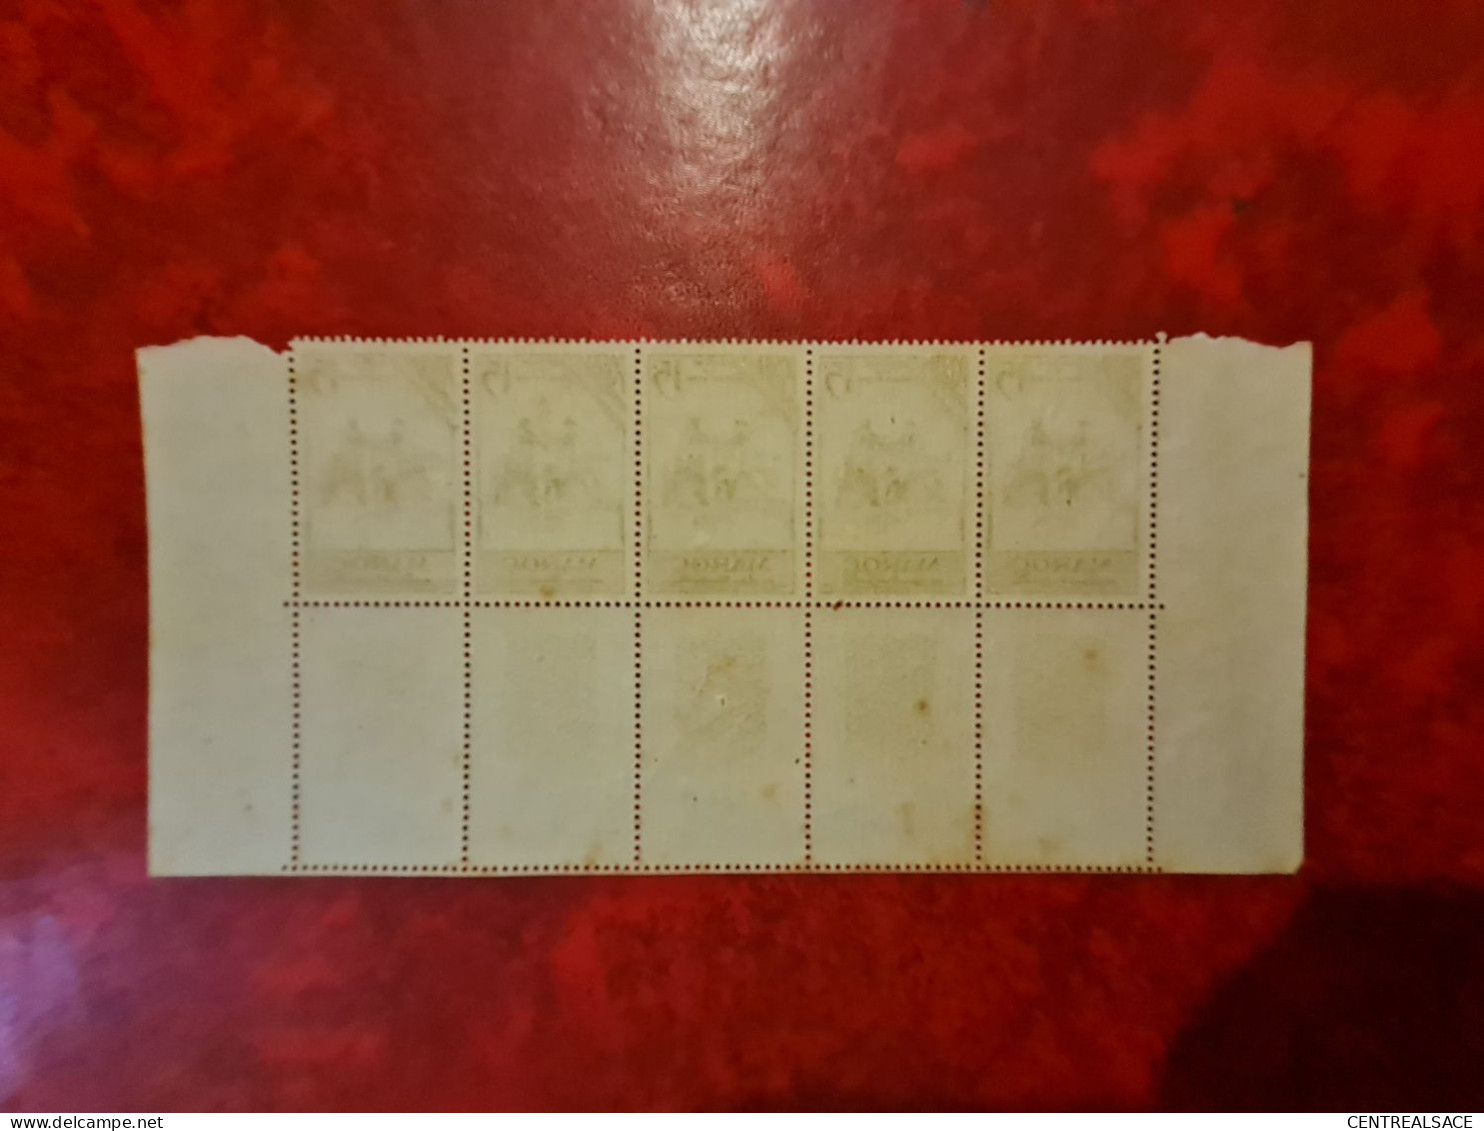 MAROC COIN DATE N° 319 DU 18/8/1958 BANDE DE 5 - Unused Stamps